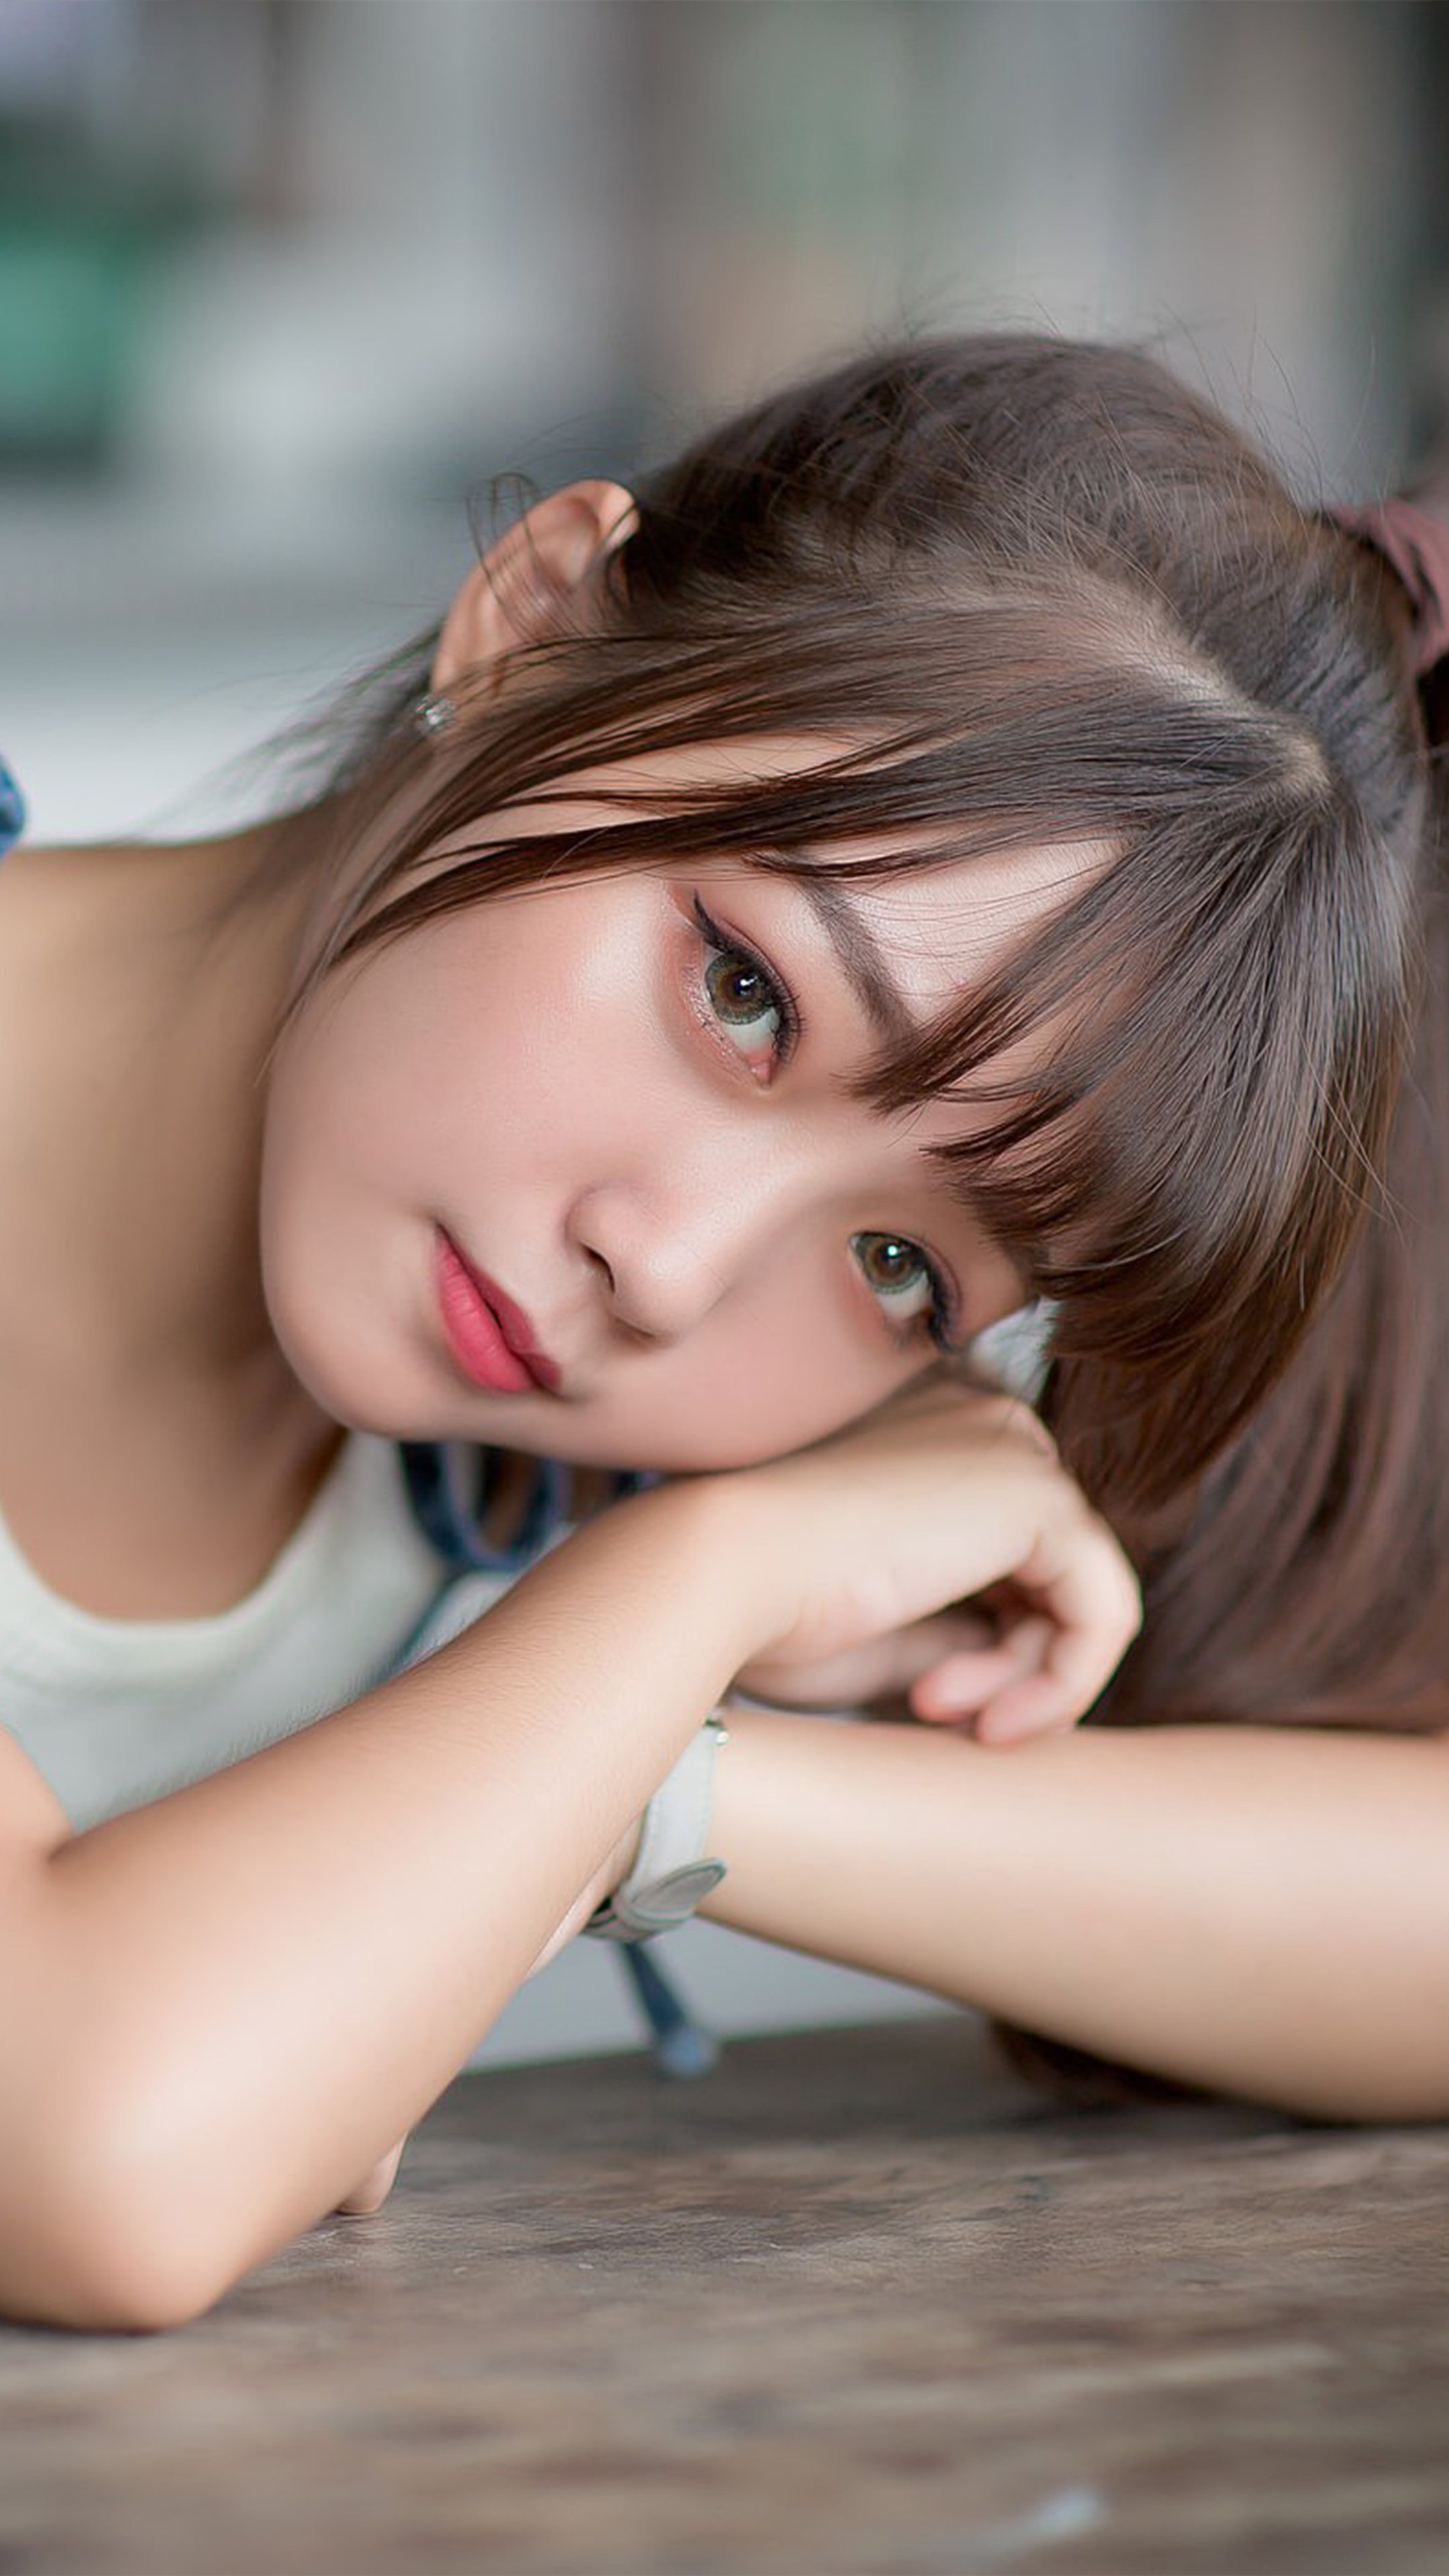 https://www.mordeo.org/files/uploads/2018/10/Gorgeous-Asian-Girl-Beauty-4K-Ultra-HD-Mobile-Wallpaper.jpg